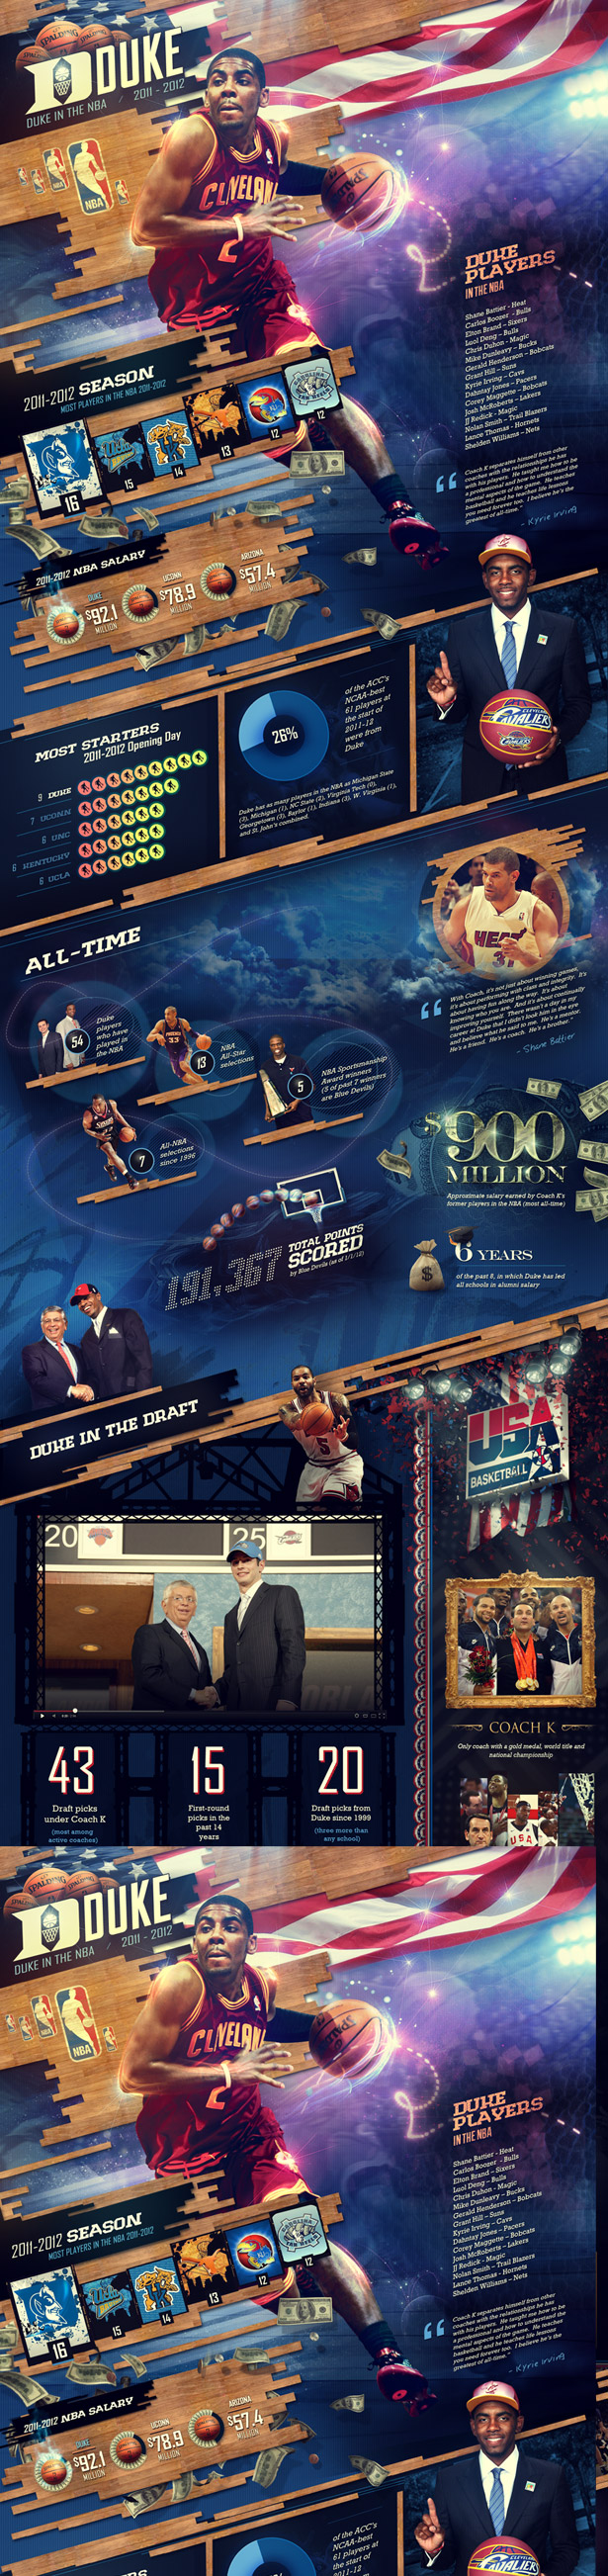 “Duke in the NBA” Infographic